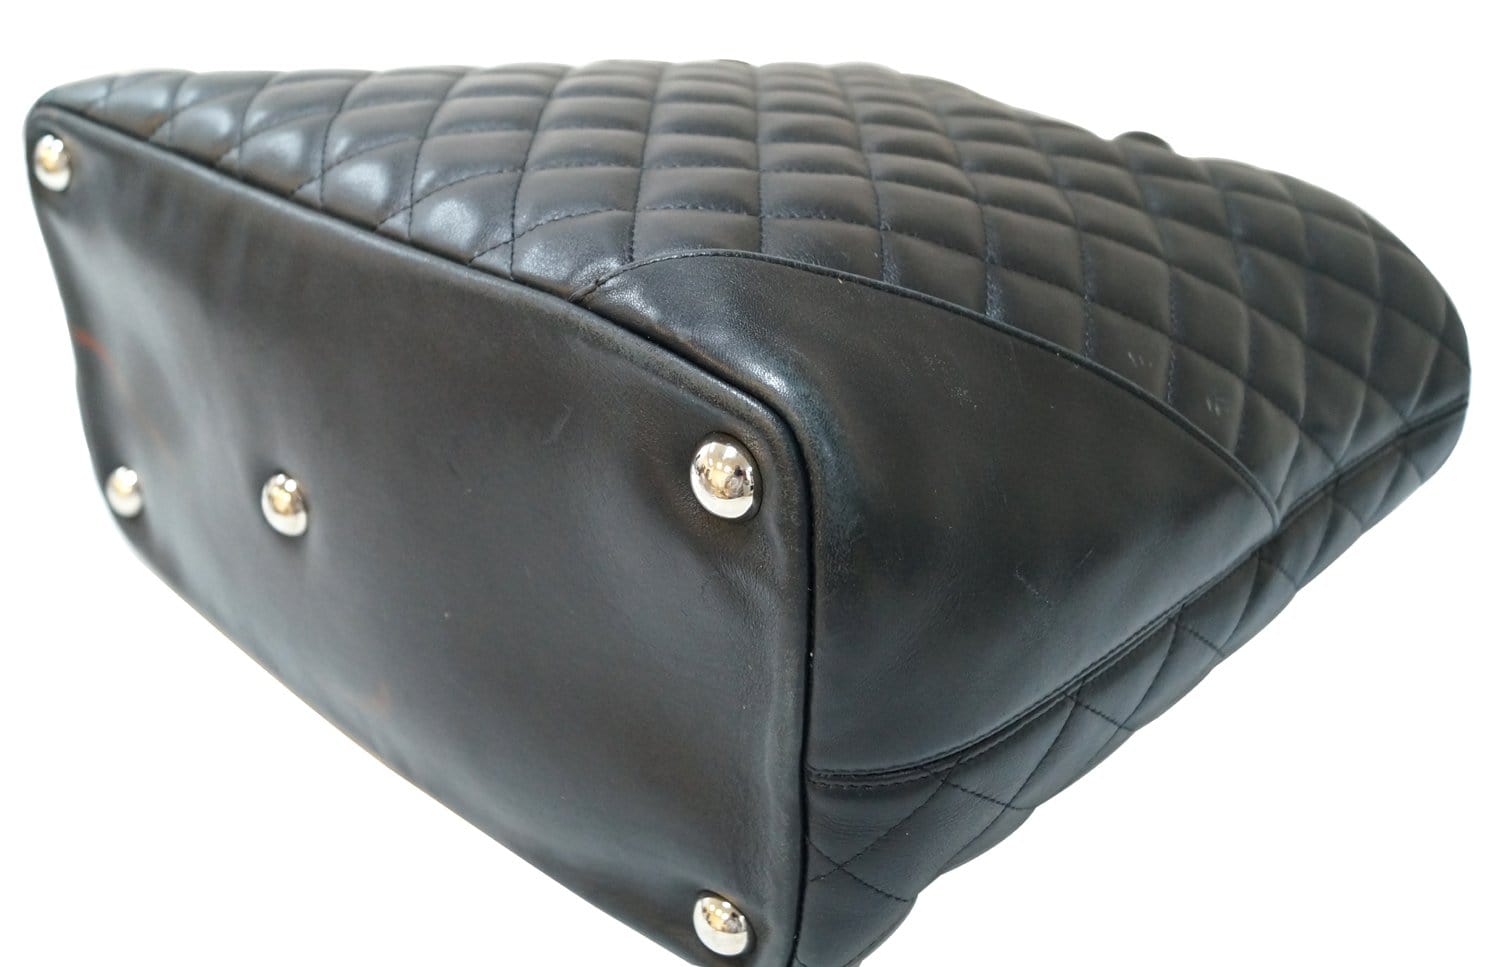 chanel black purse with white cc